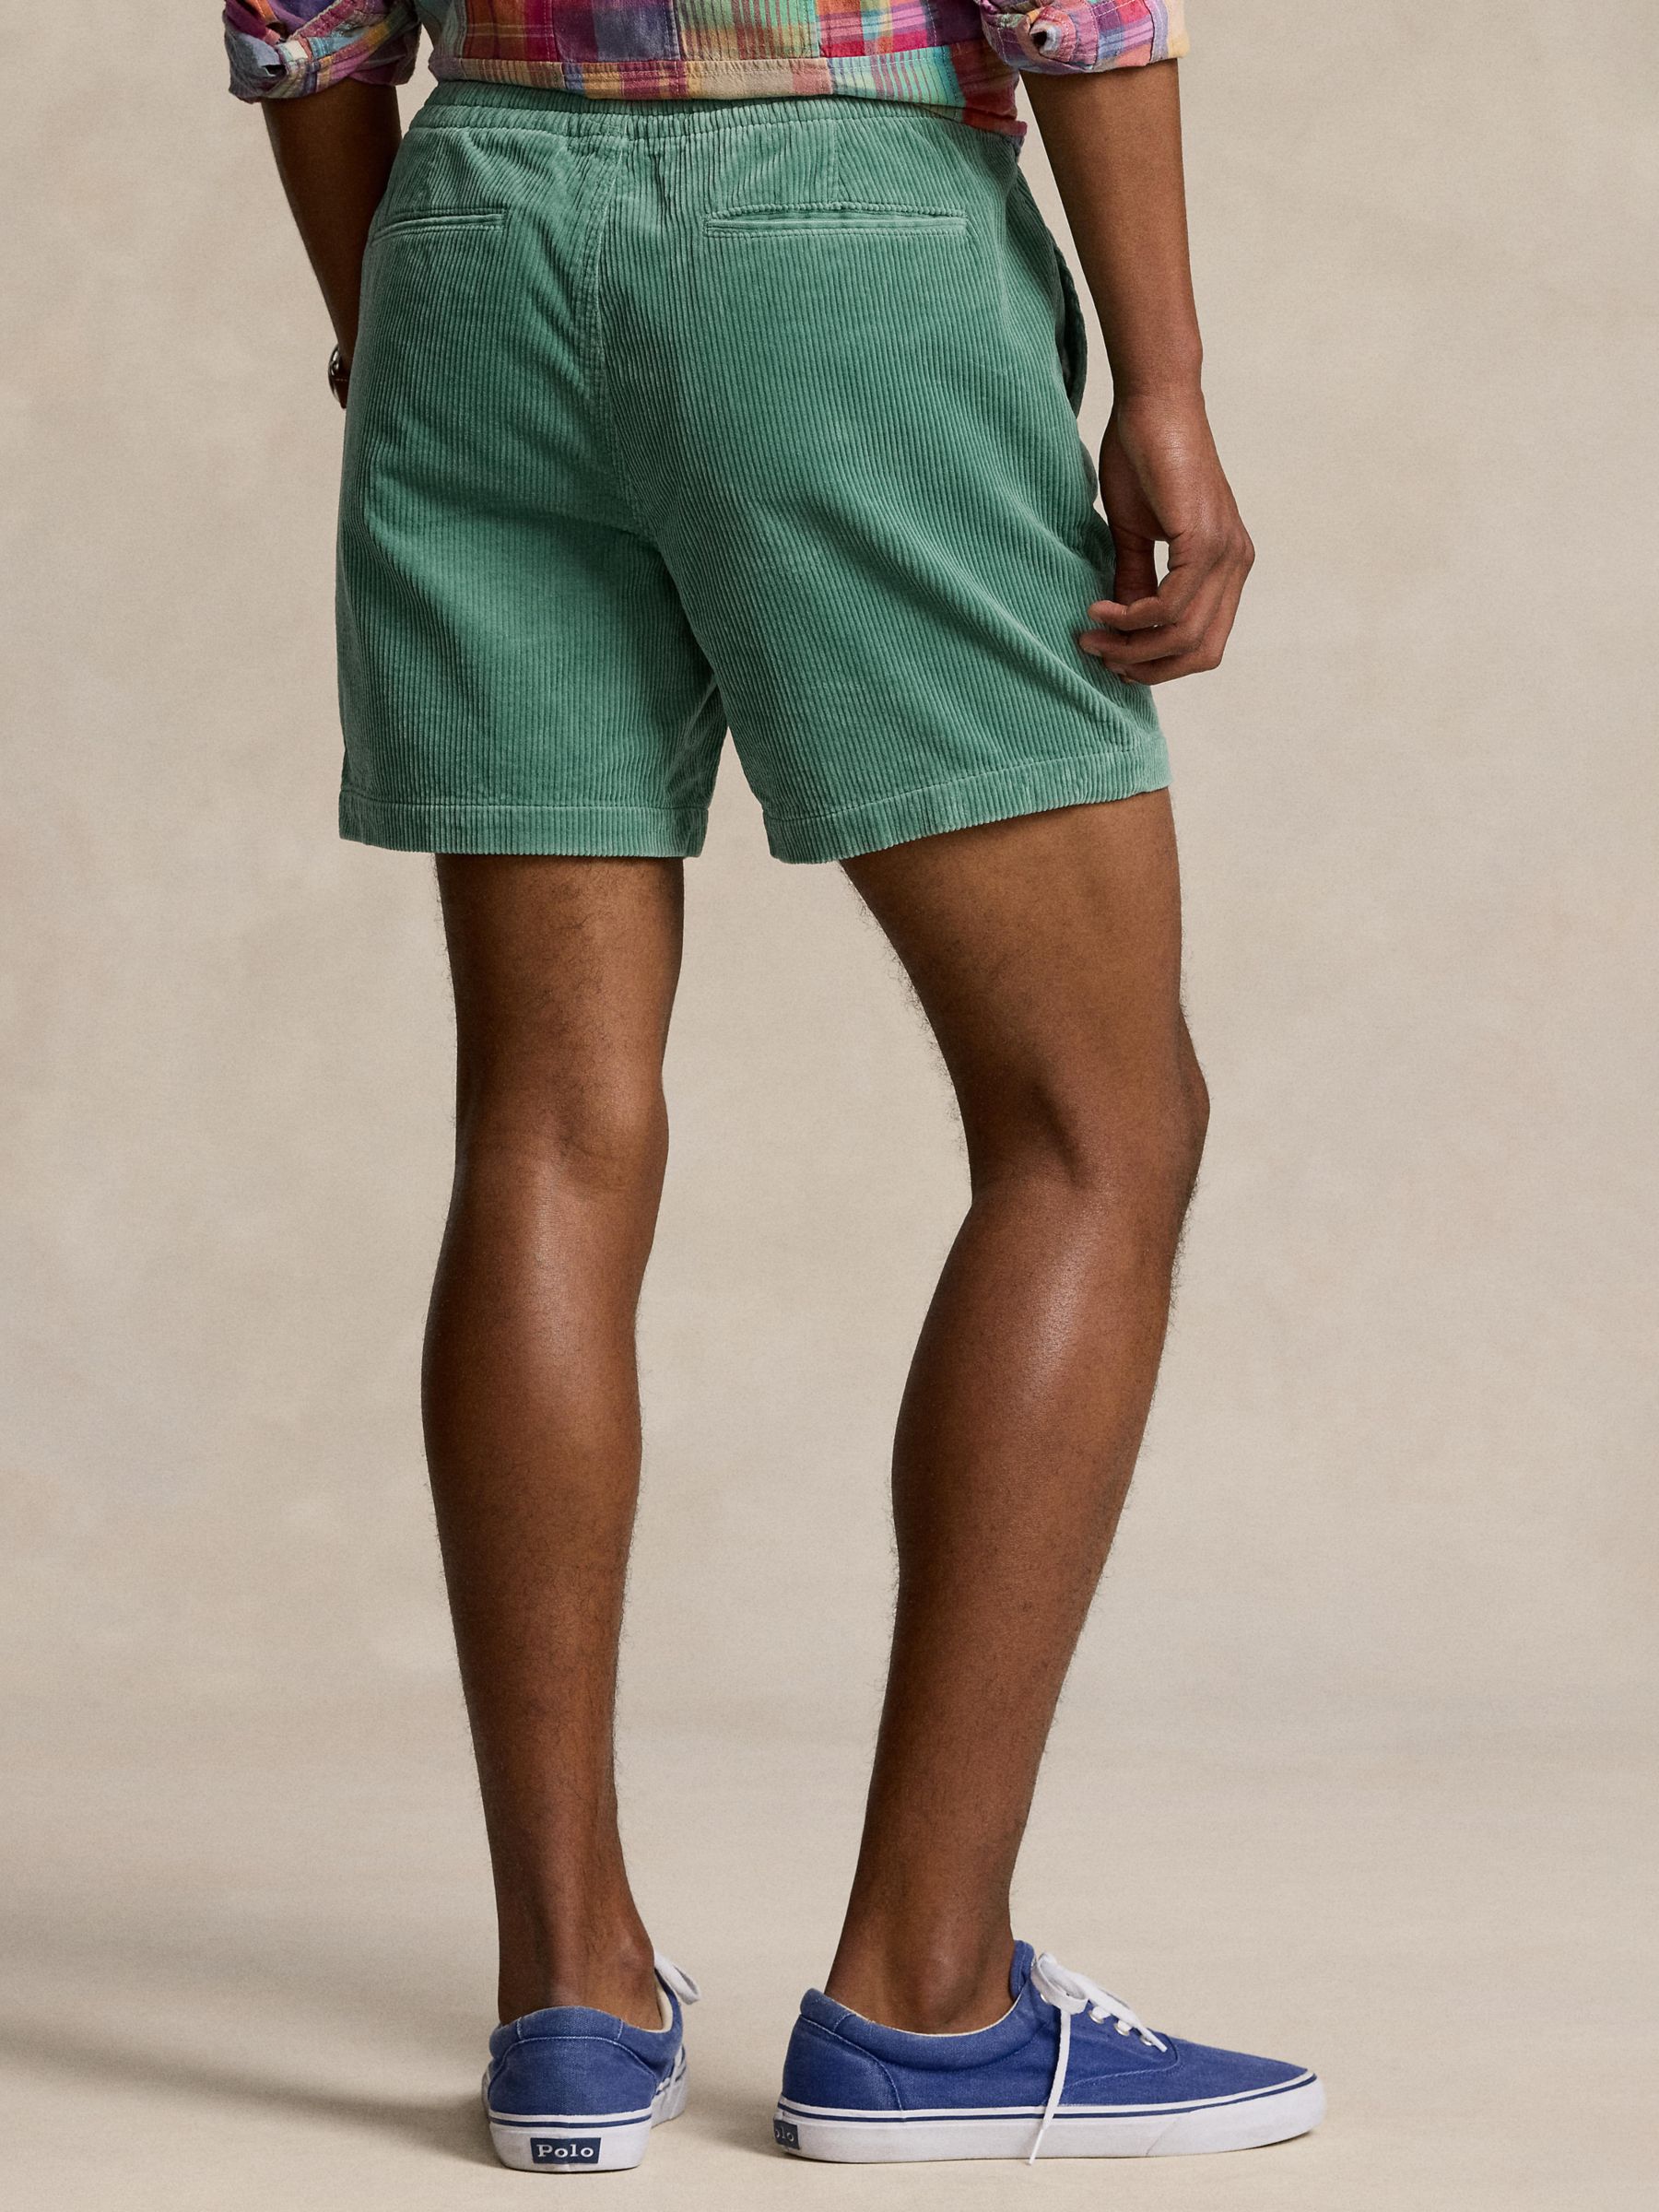 Ralph Lauren 6-Inch Polo Prepster Corduroy Shorts, Seafoam Green, S